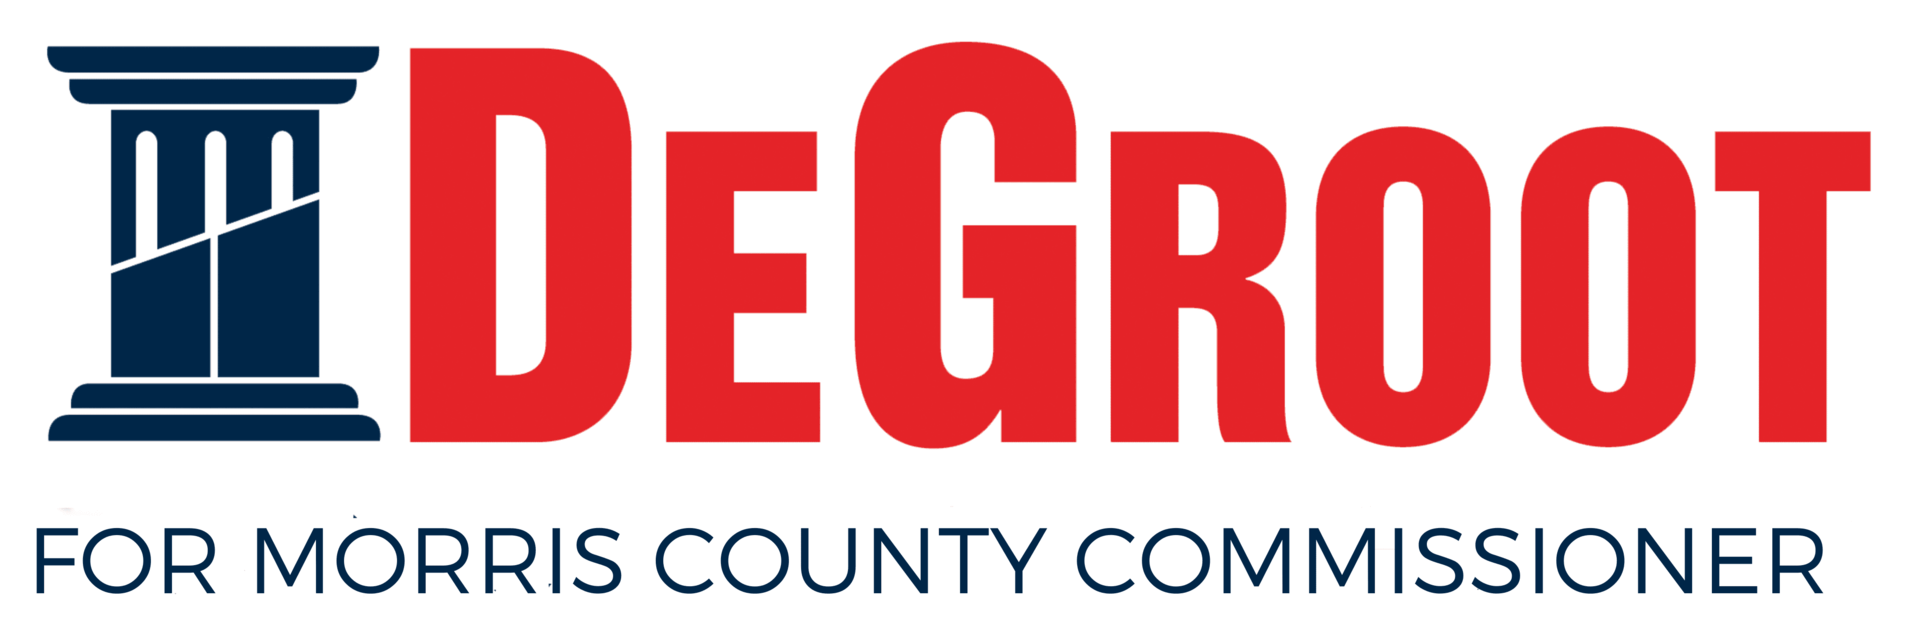 Degroot for morris county commissioner logo